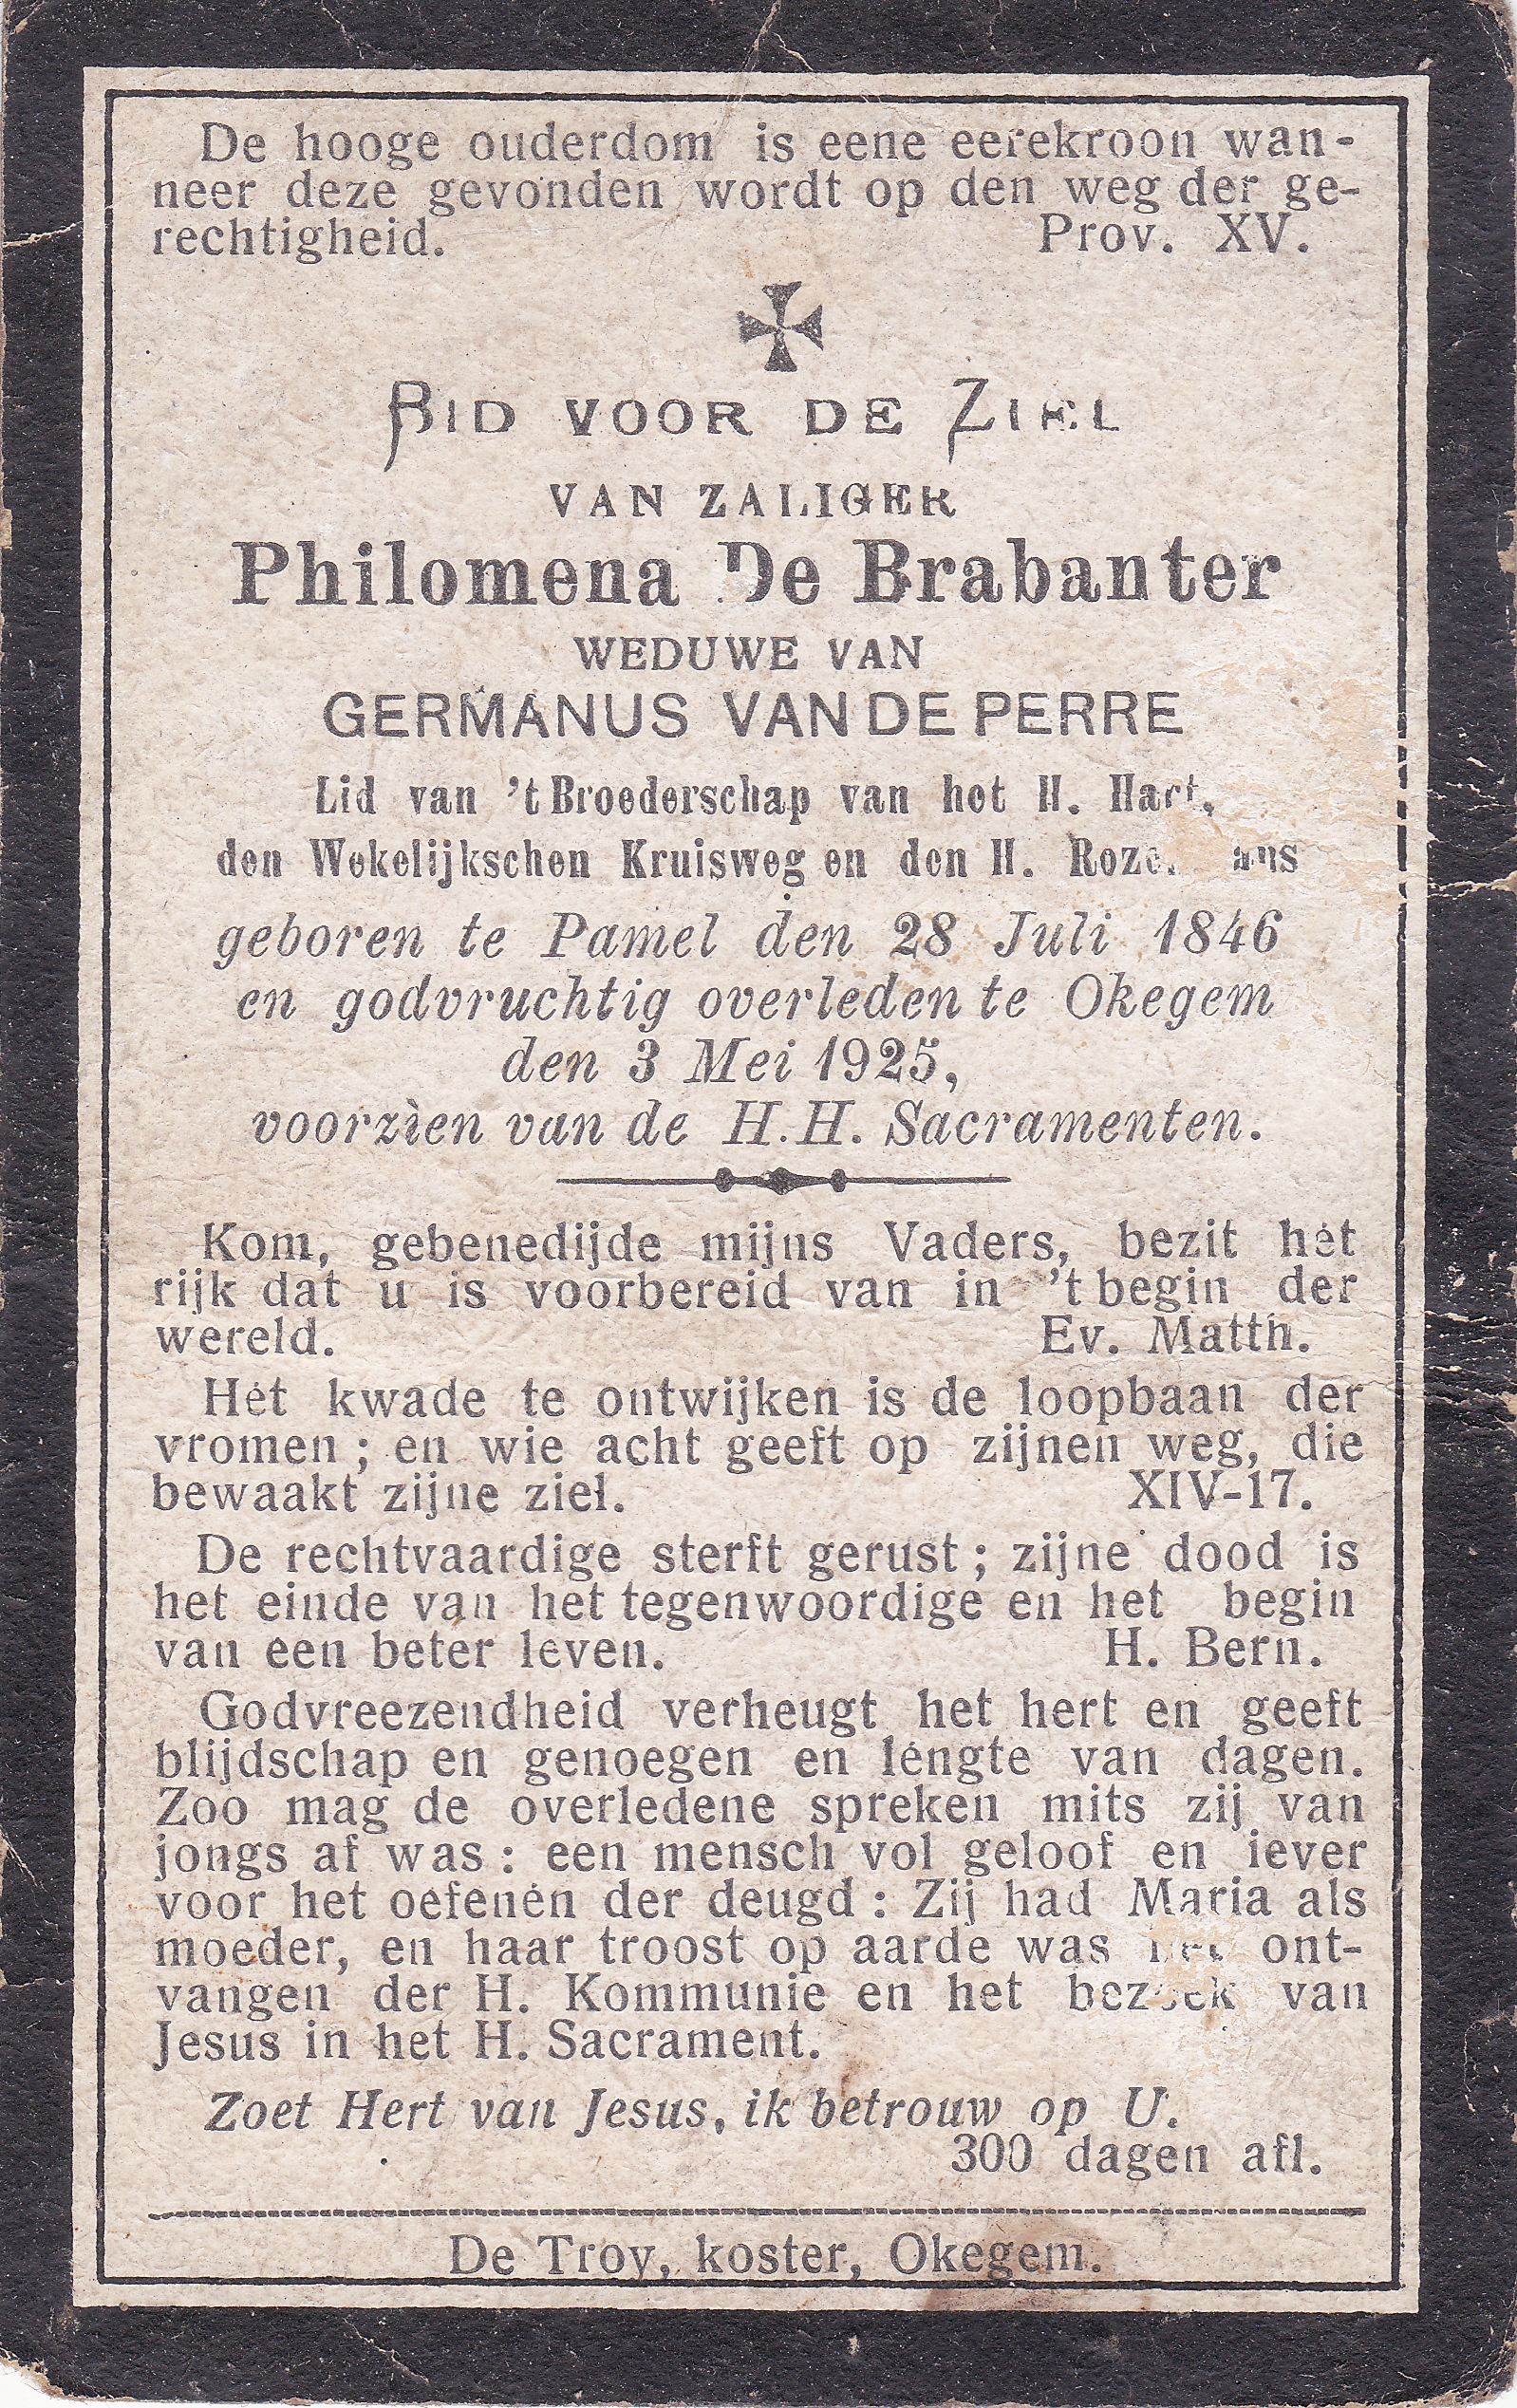 De Brabanter Philomena